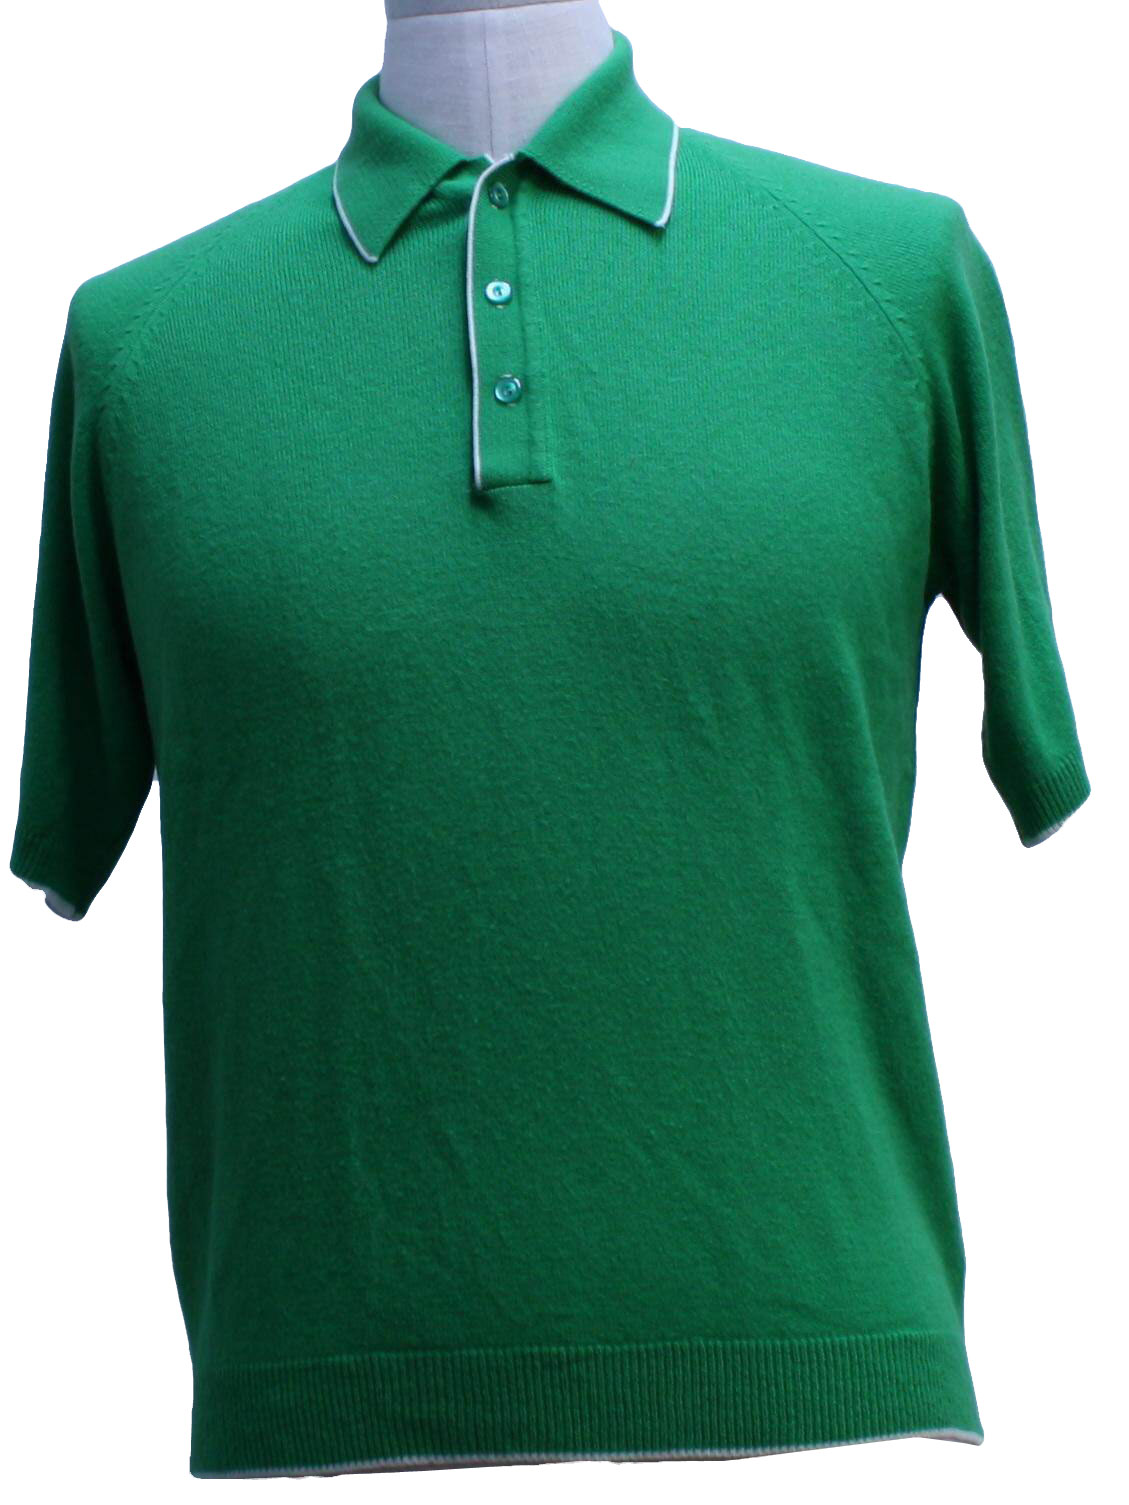 1960's Retro Knit Shirt: 60s -Goldcrest- Mens grass green and white ...